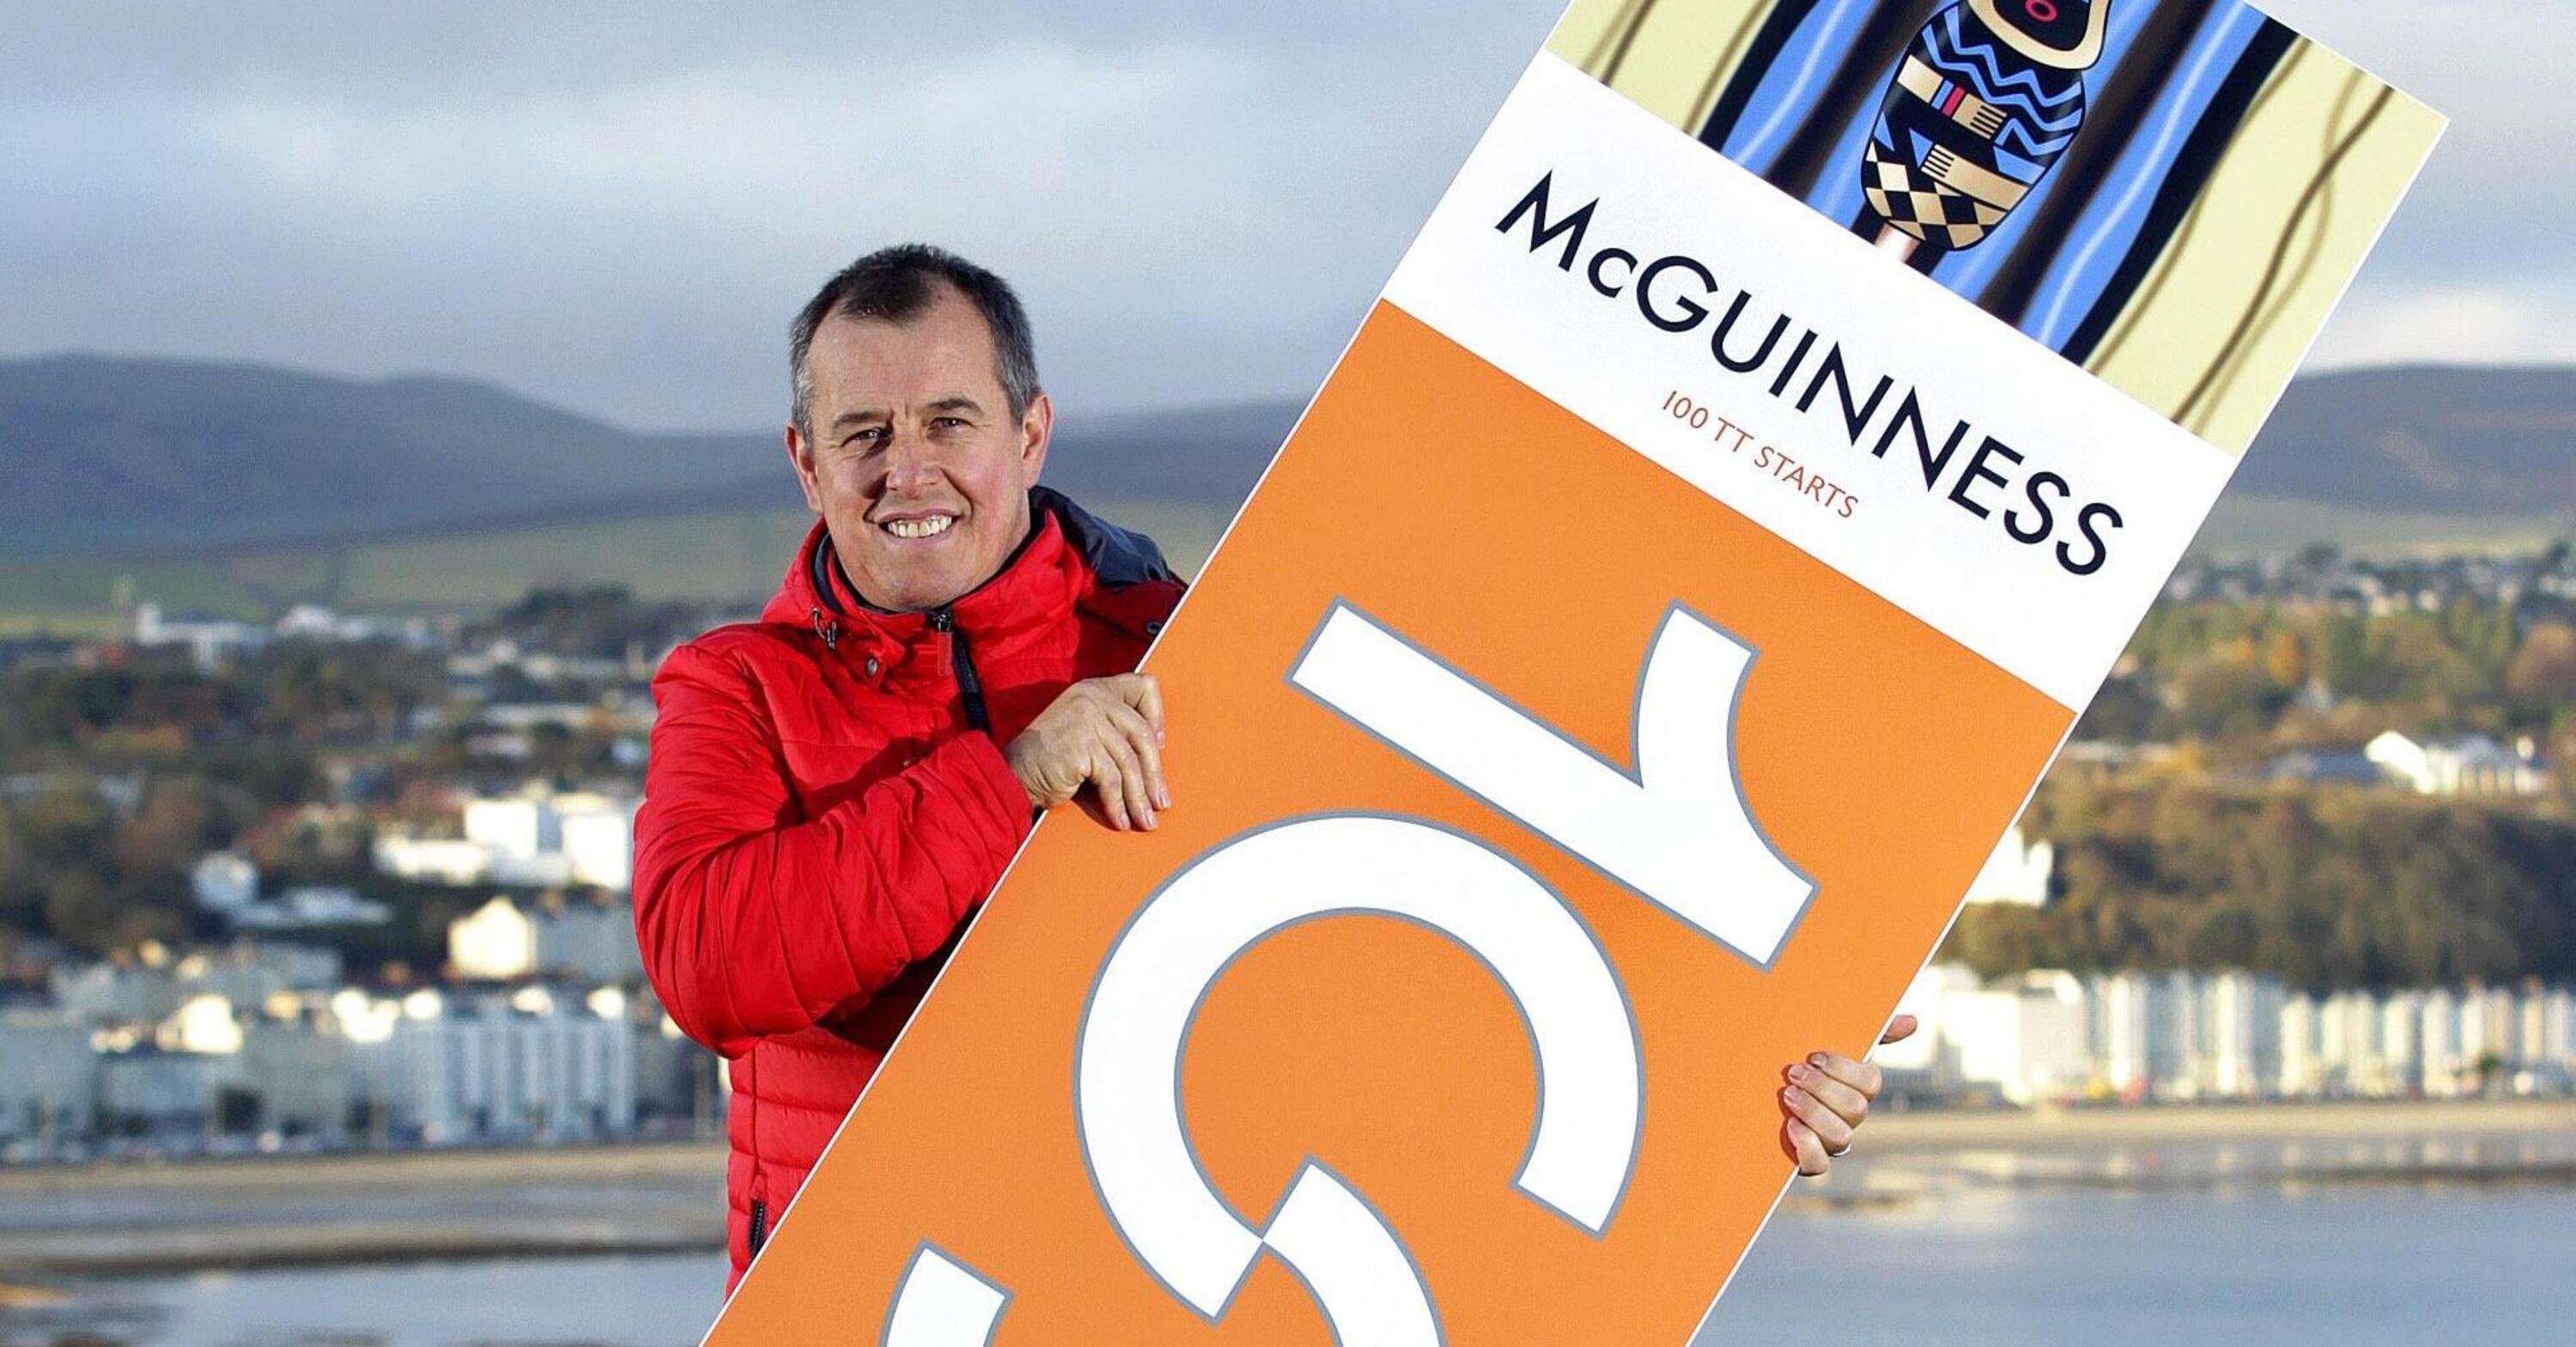 TT 2022: John McGuinness pronto alla centesima partenza al Tourist Trophy